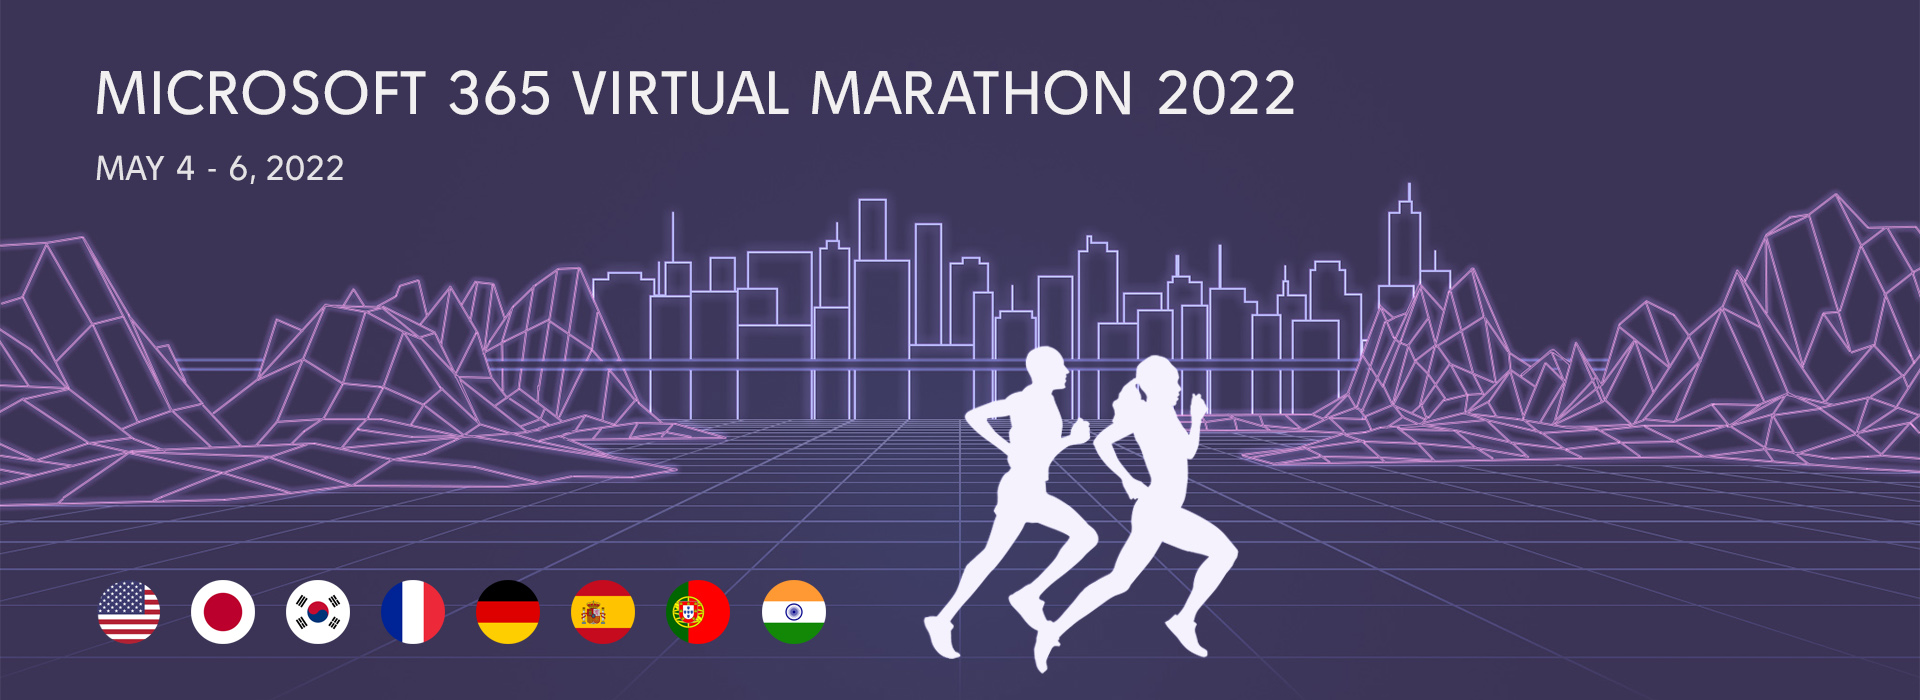 Microsoft 365 Virtual Marathon, May 4-6, 2022 logo